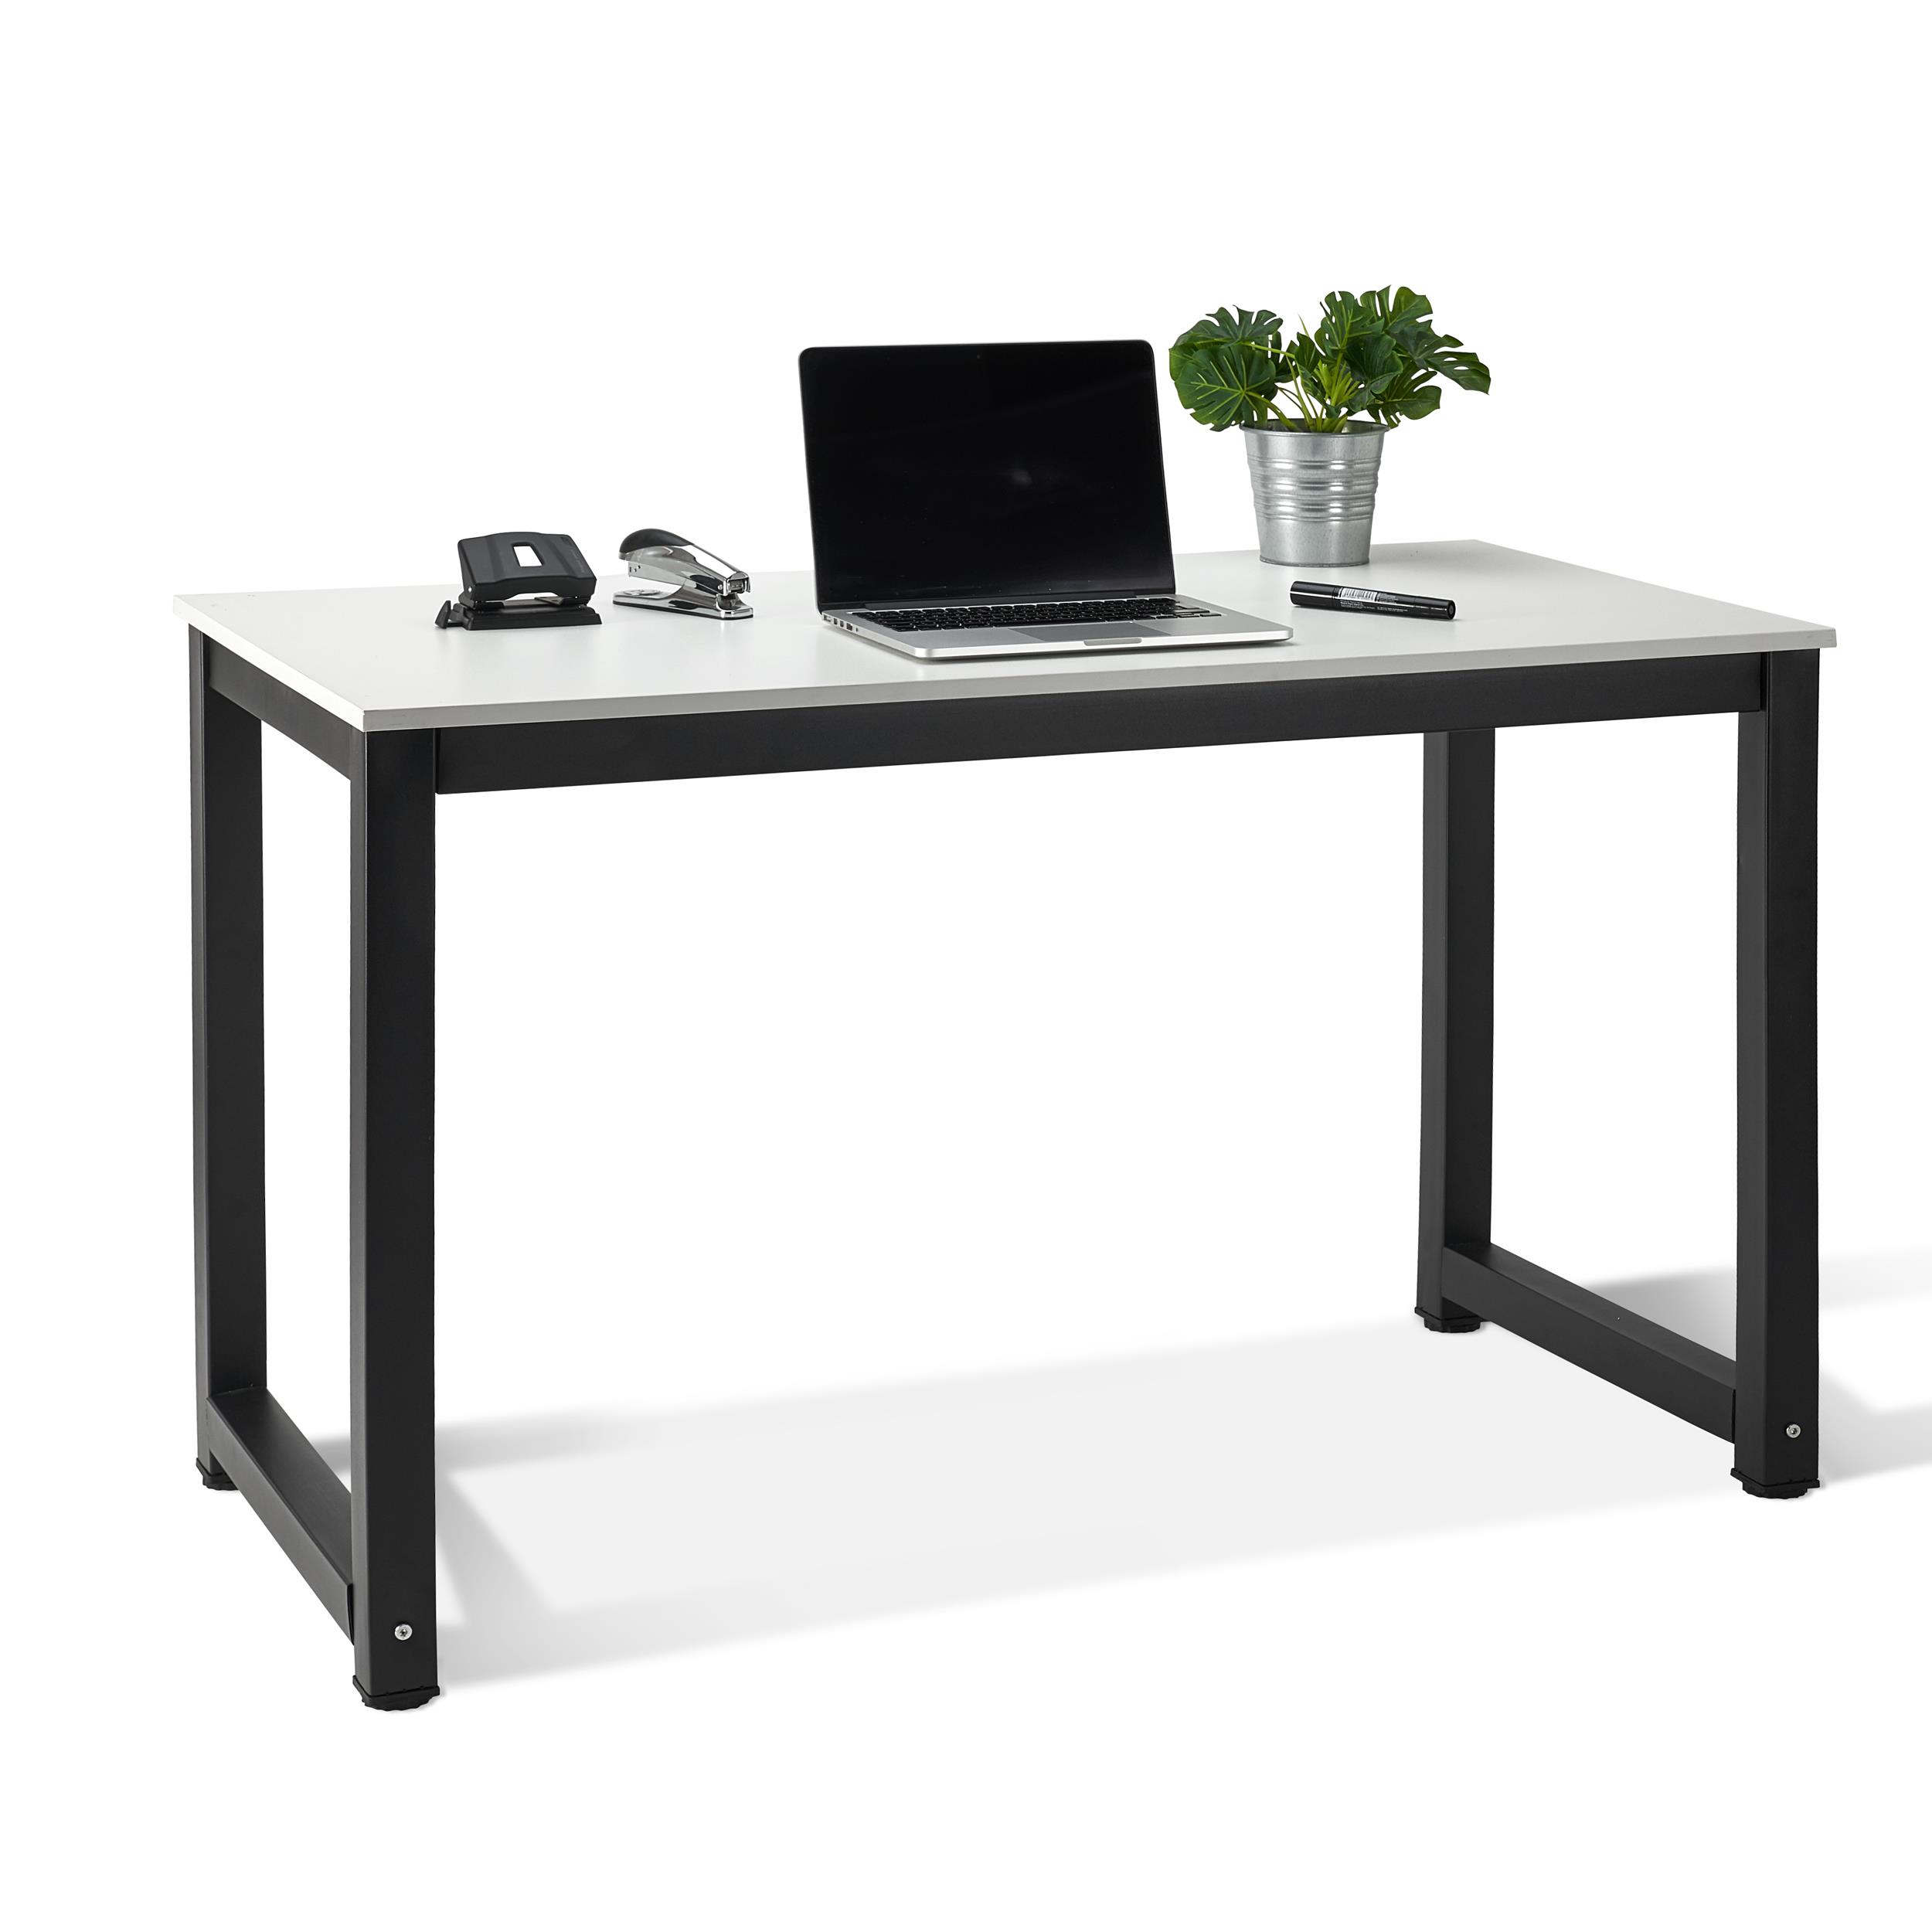 Mesa Para Computador DINA, 120x60x75cm, Madeira e Metal, Pernas Pretas, Cor Branco